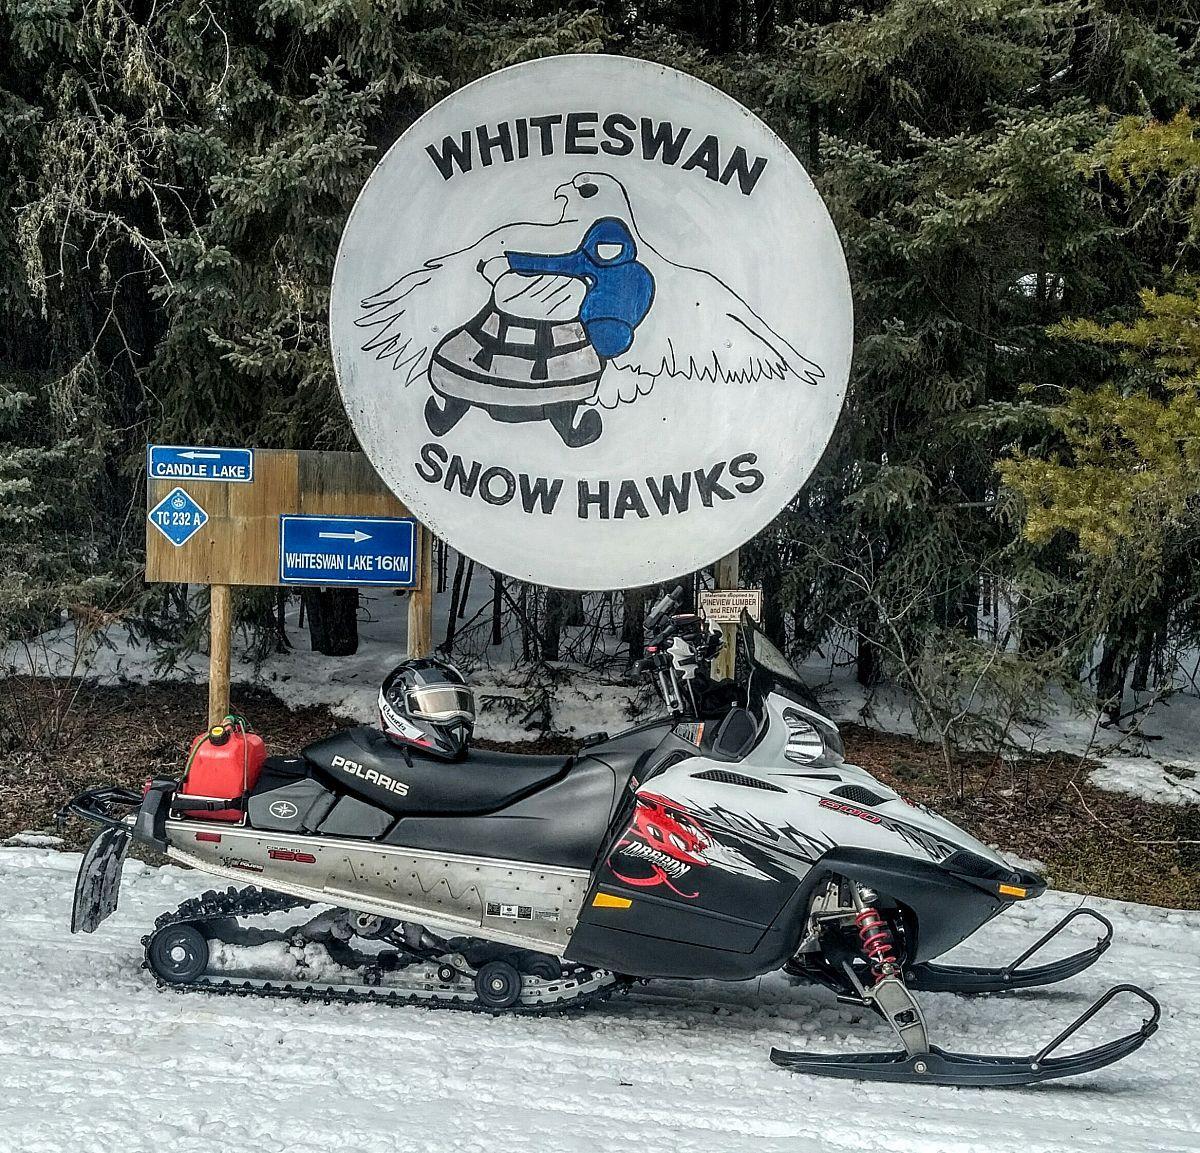 Snowhawks Logo - Trevor Schell - Whiteswan SnowHawks Trails 232 - Warm UP Shelter ...